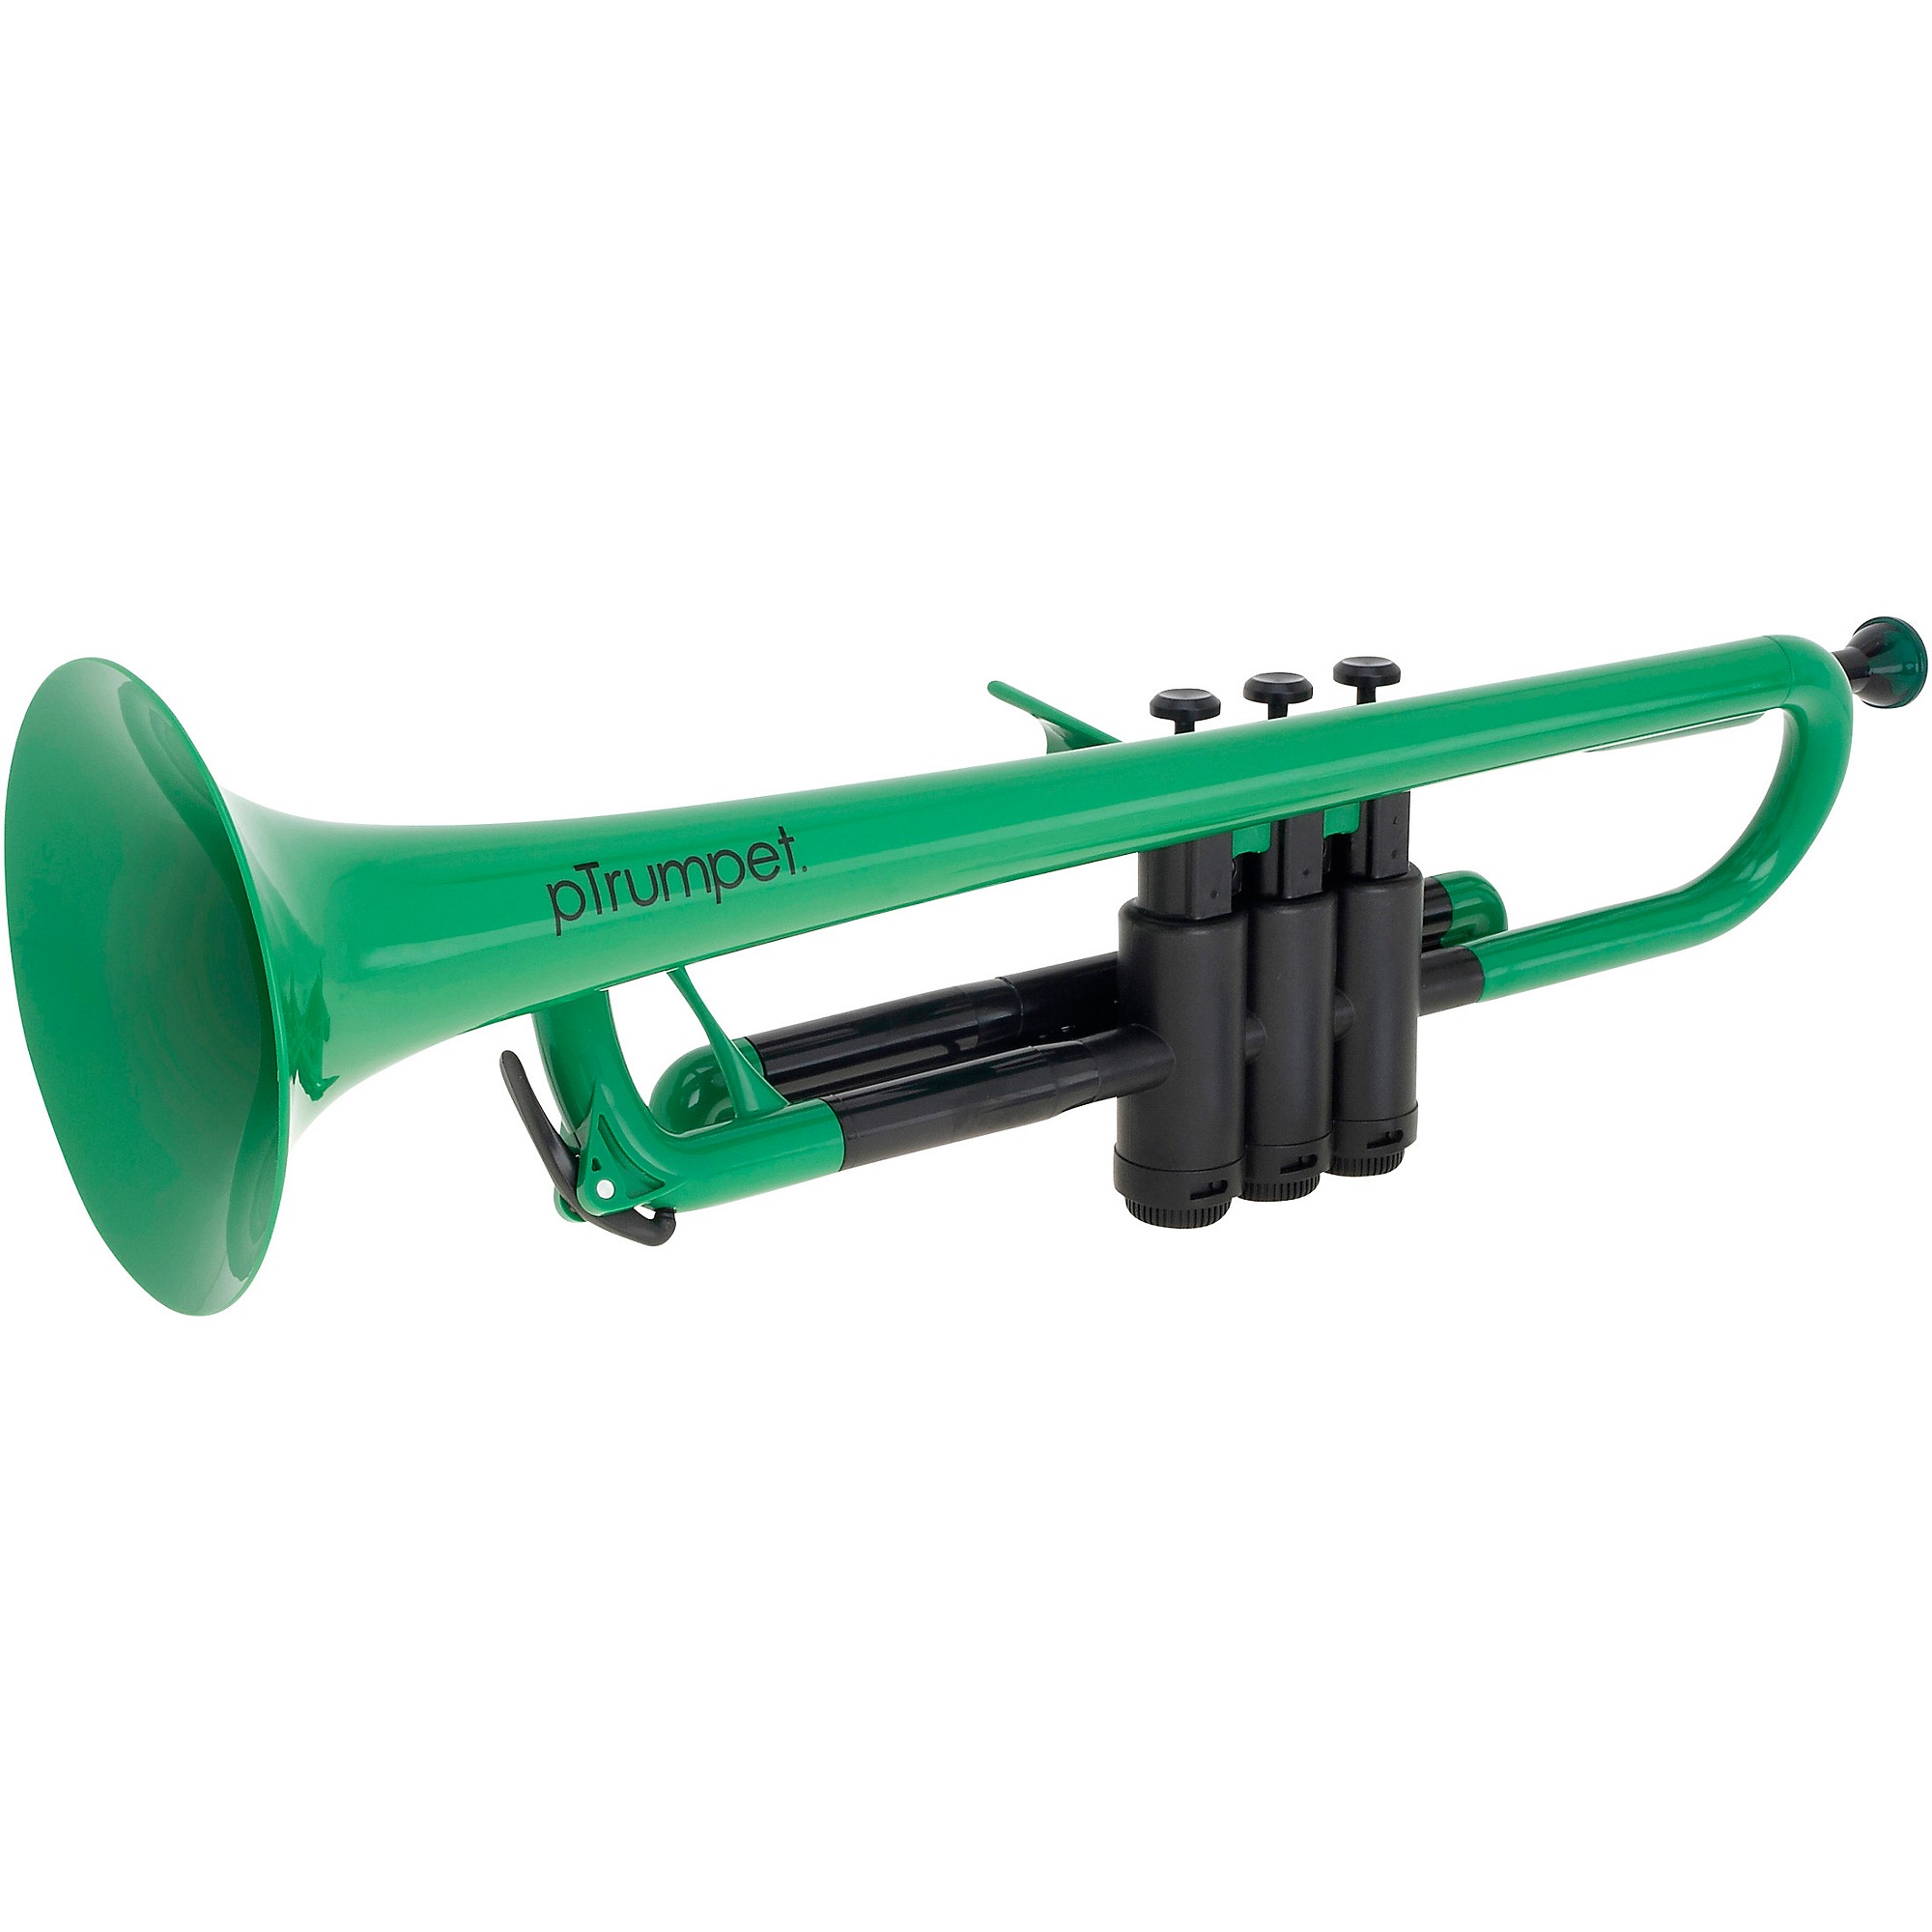 Plastic　pTrumpet　Guitar　Green　Trumpet　2.0　Center